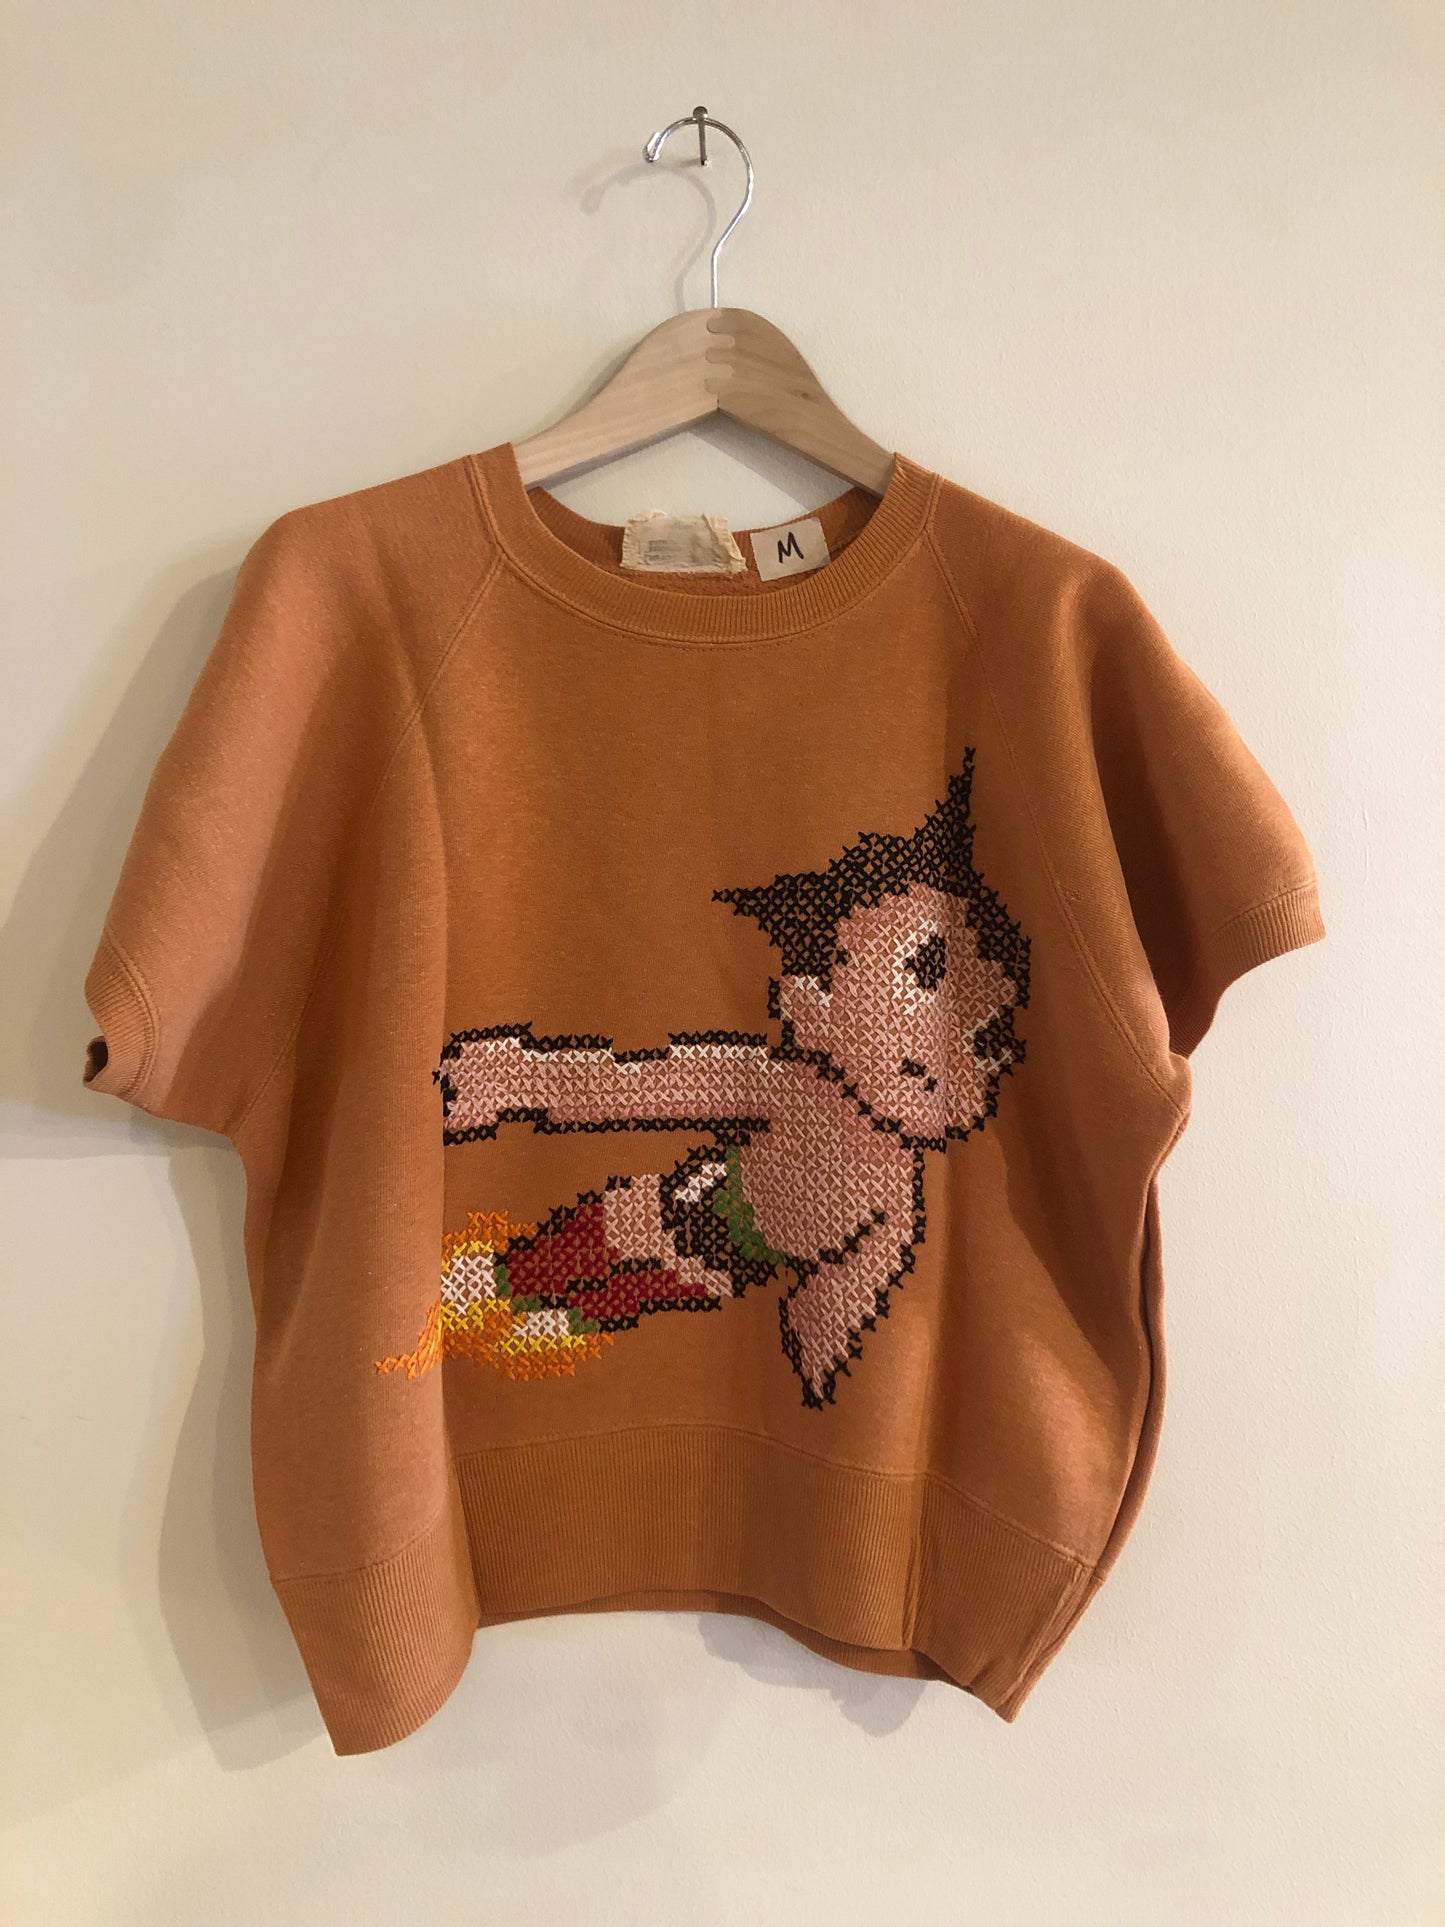 "Astro Boy" Sweatshirt